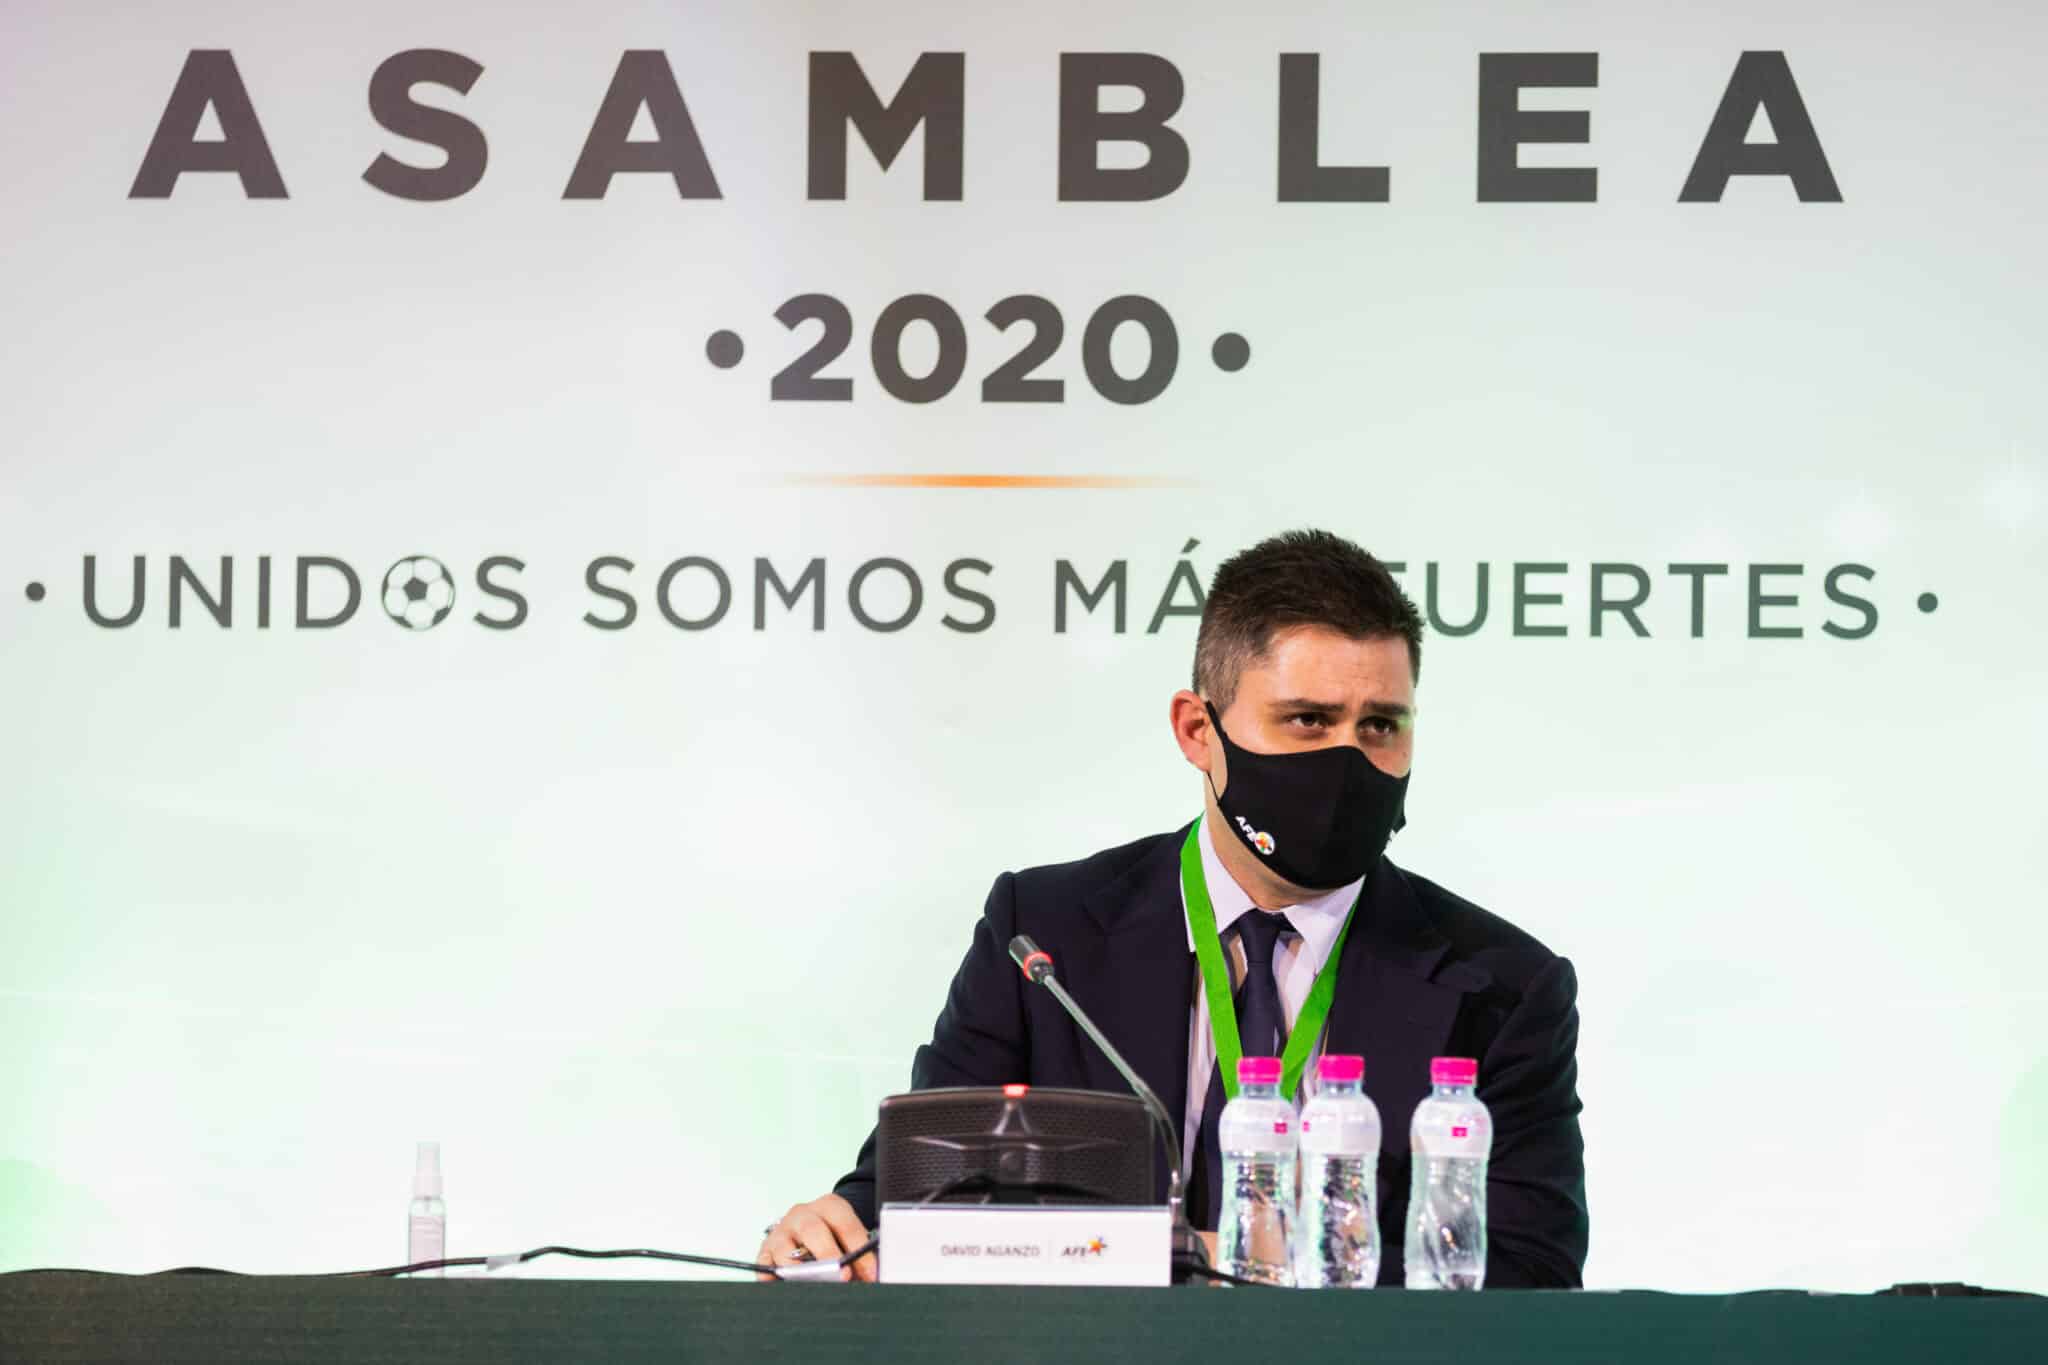 ASAMBLEA AFE 2020